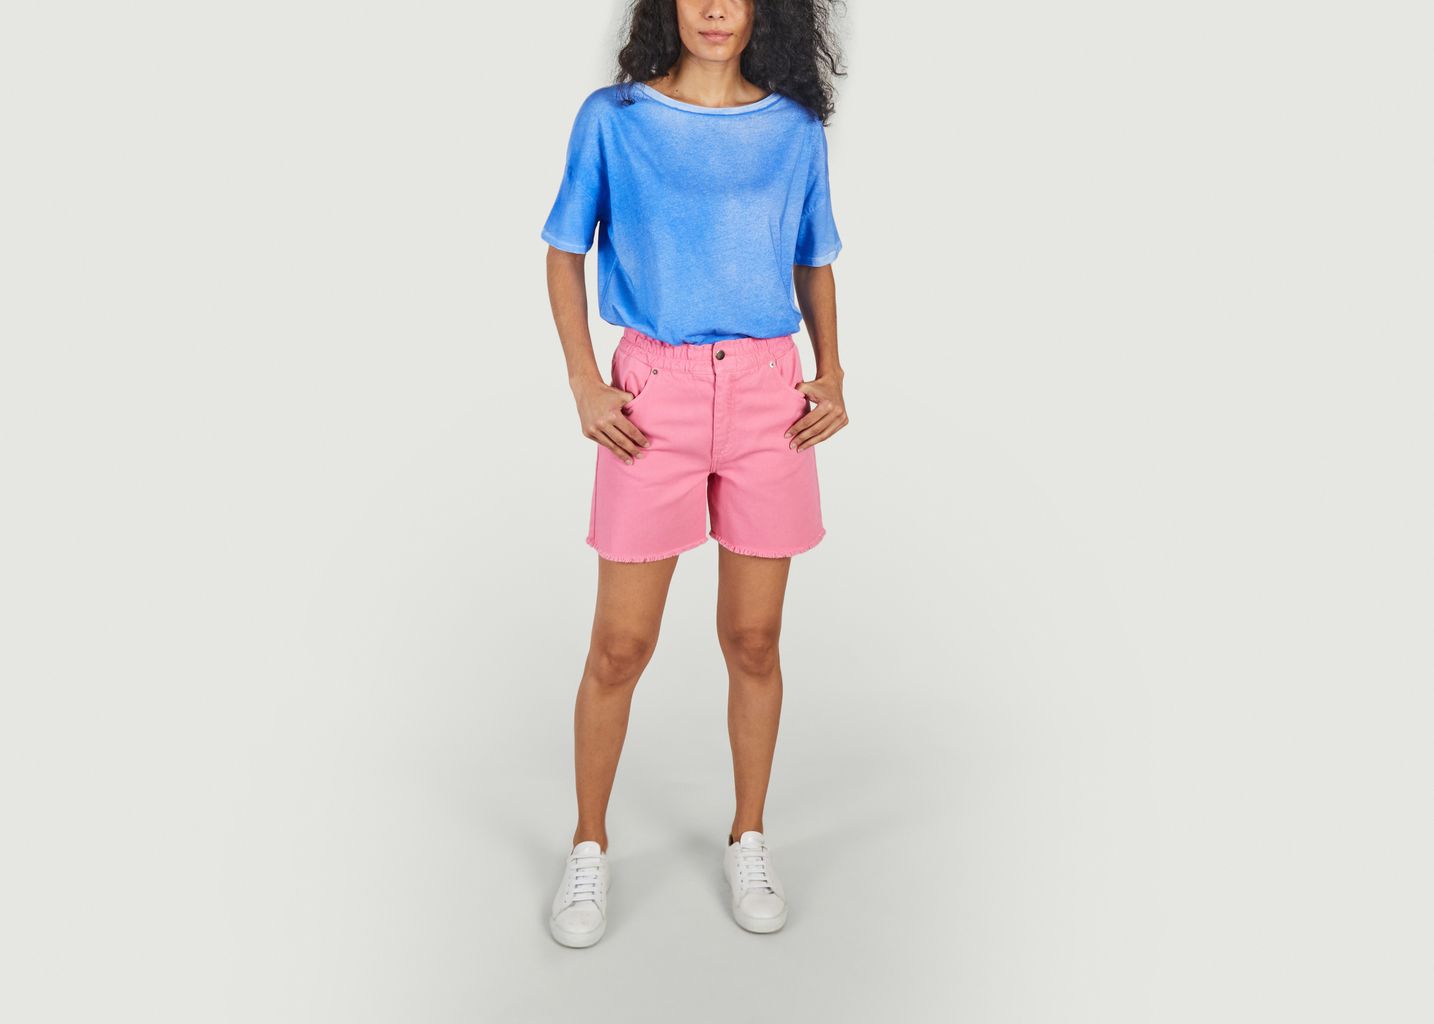 Jean shorts - Maevy